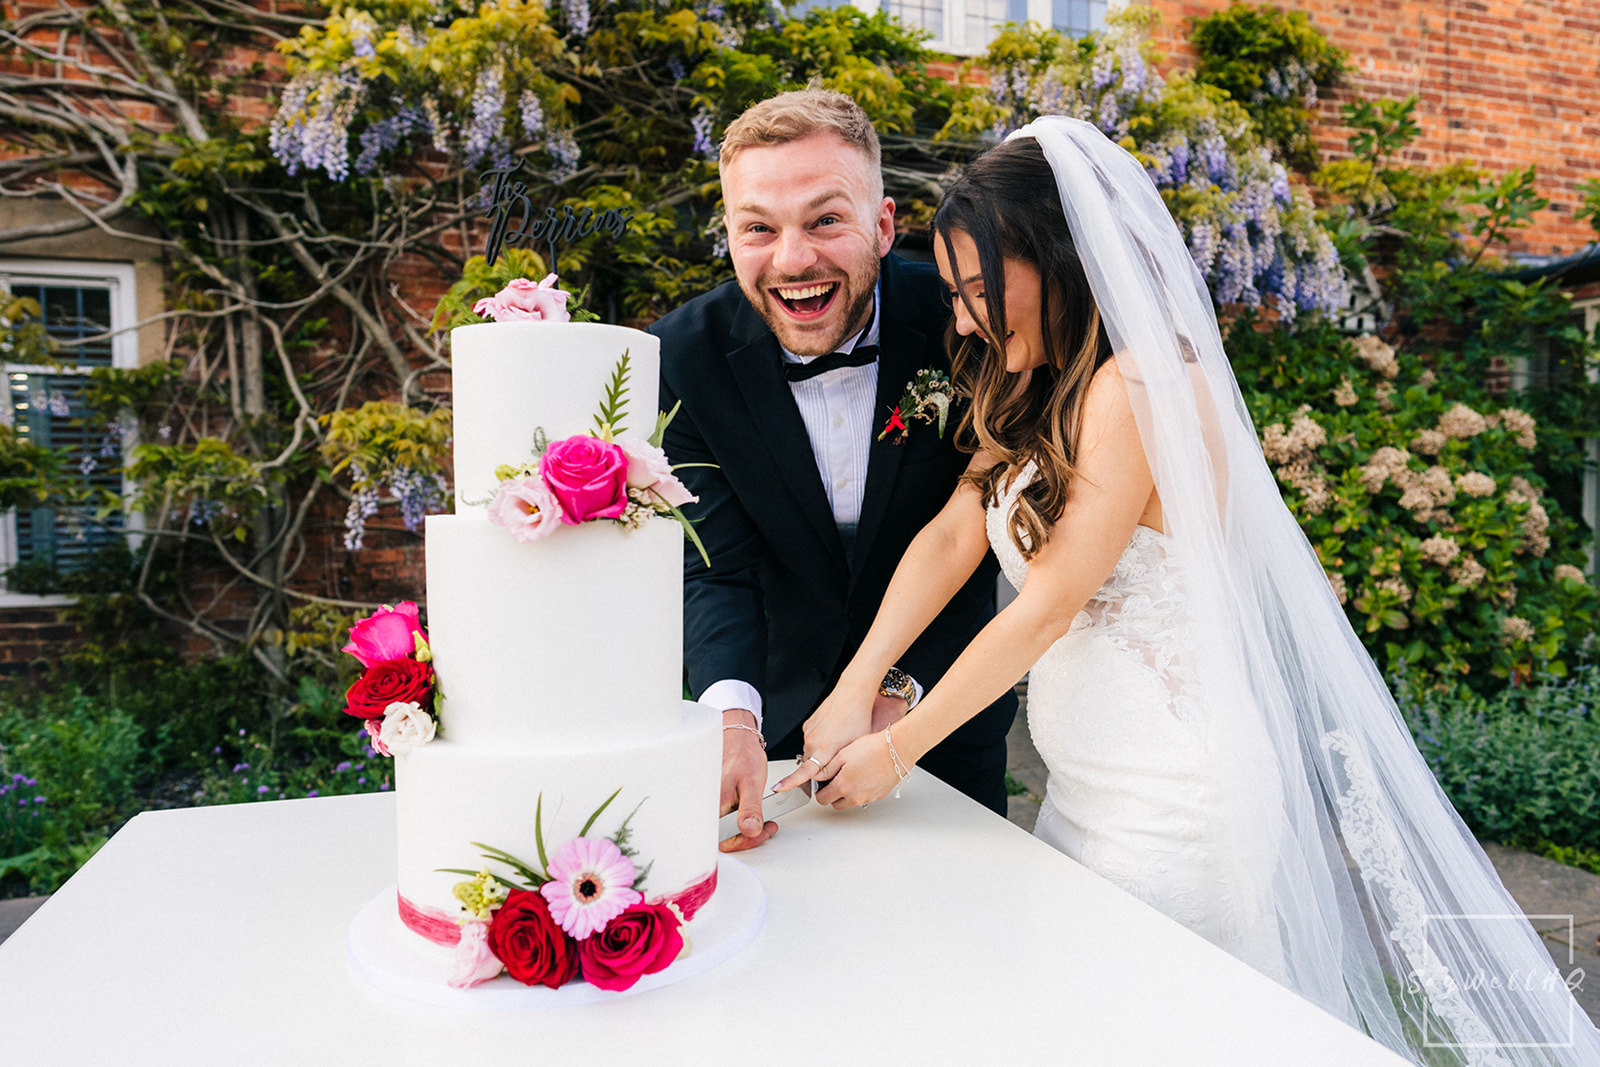 Documentary Wedding Photography Portfolio - bride and groom cutting the wedding cake in the gardens of the wedding venue